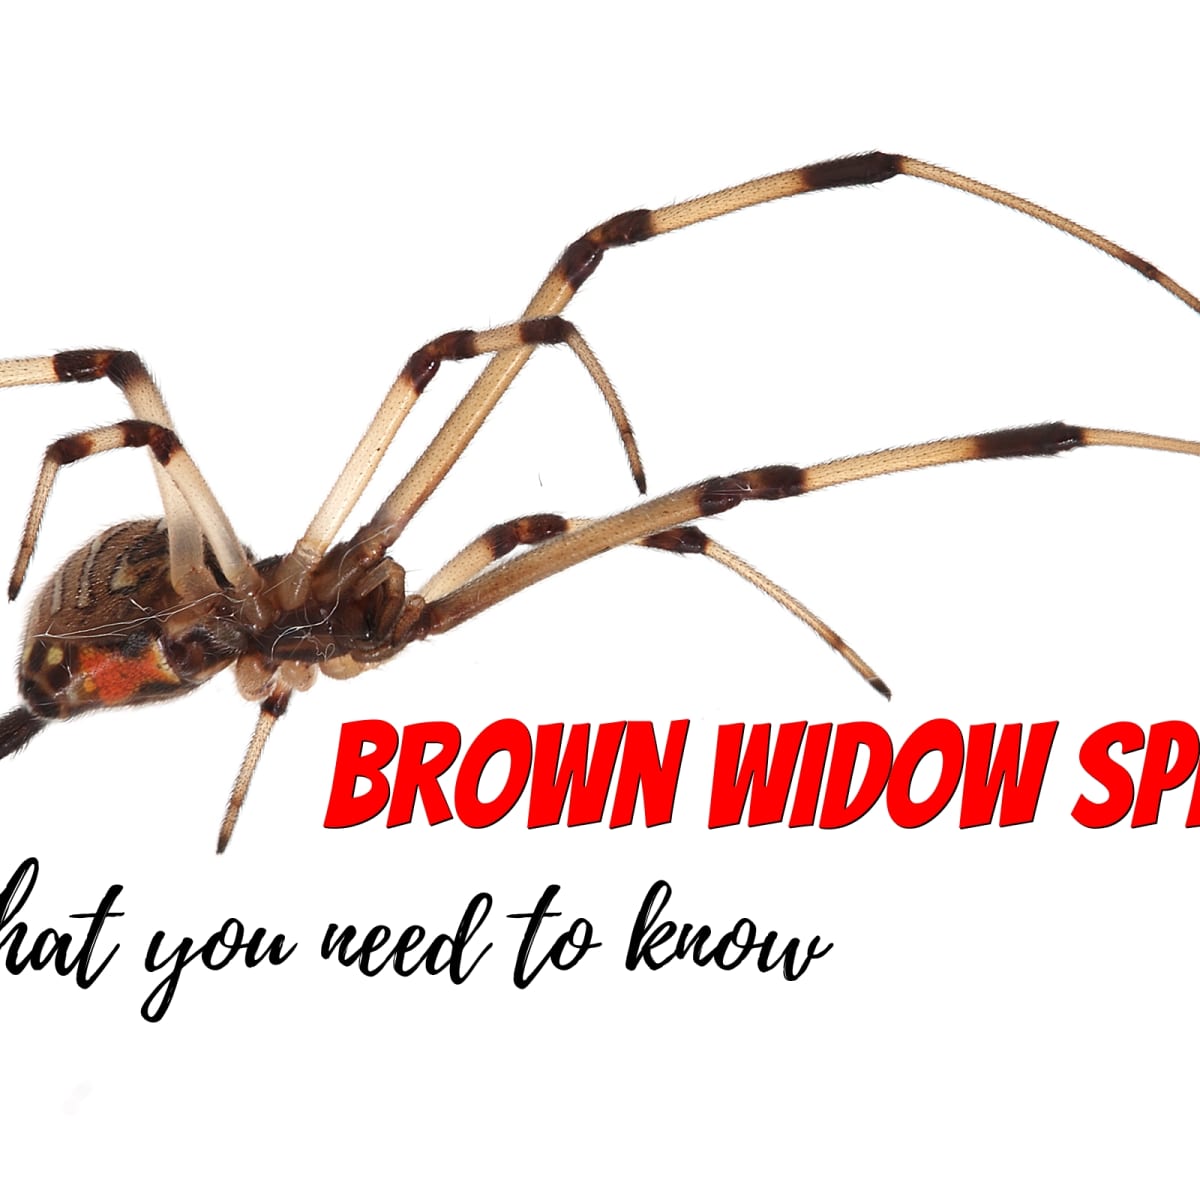 How To Treat A Black Widow Bite - Black Widow Spider Bite Poisoning In Cats Petmd / Black widow spider antivenin is seldom necessary.